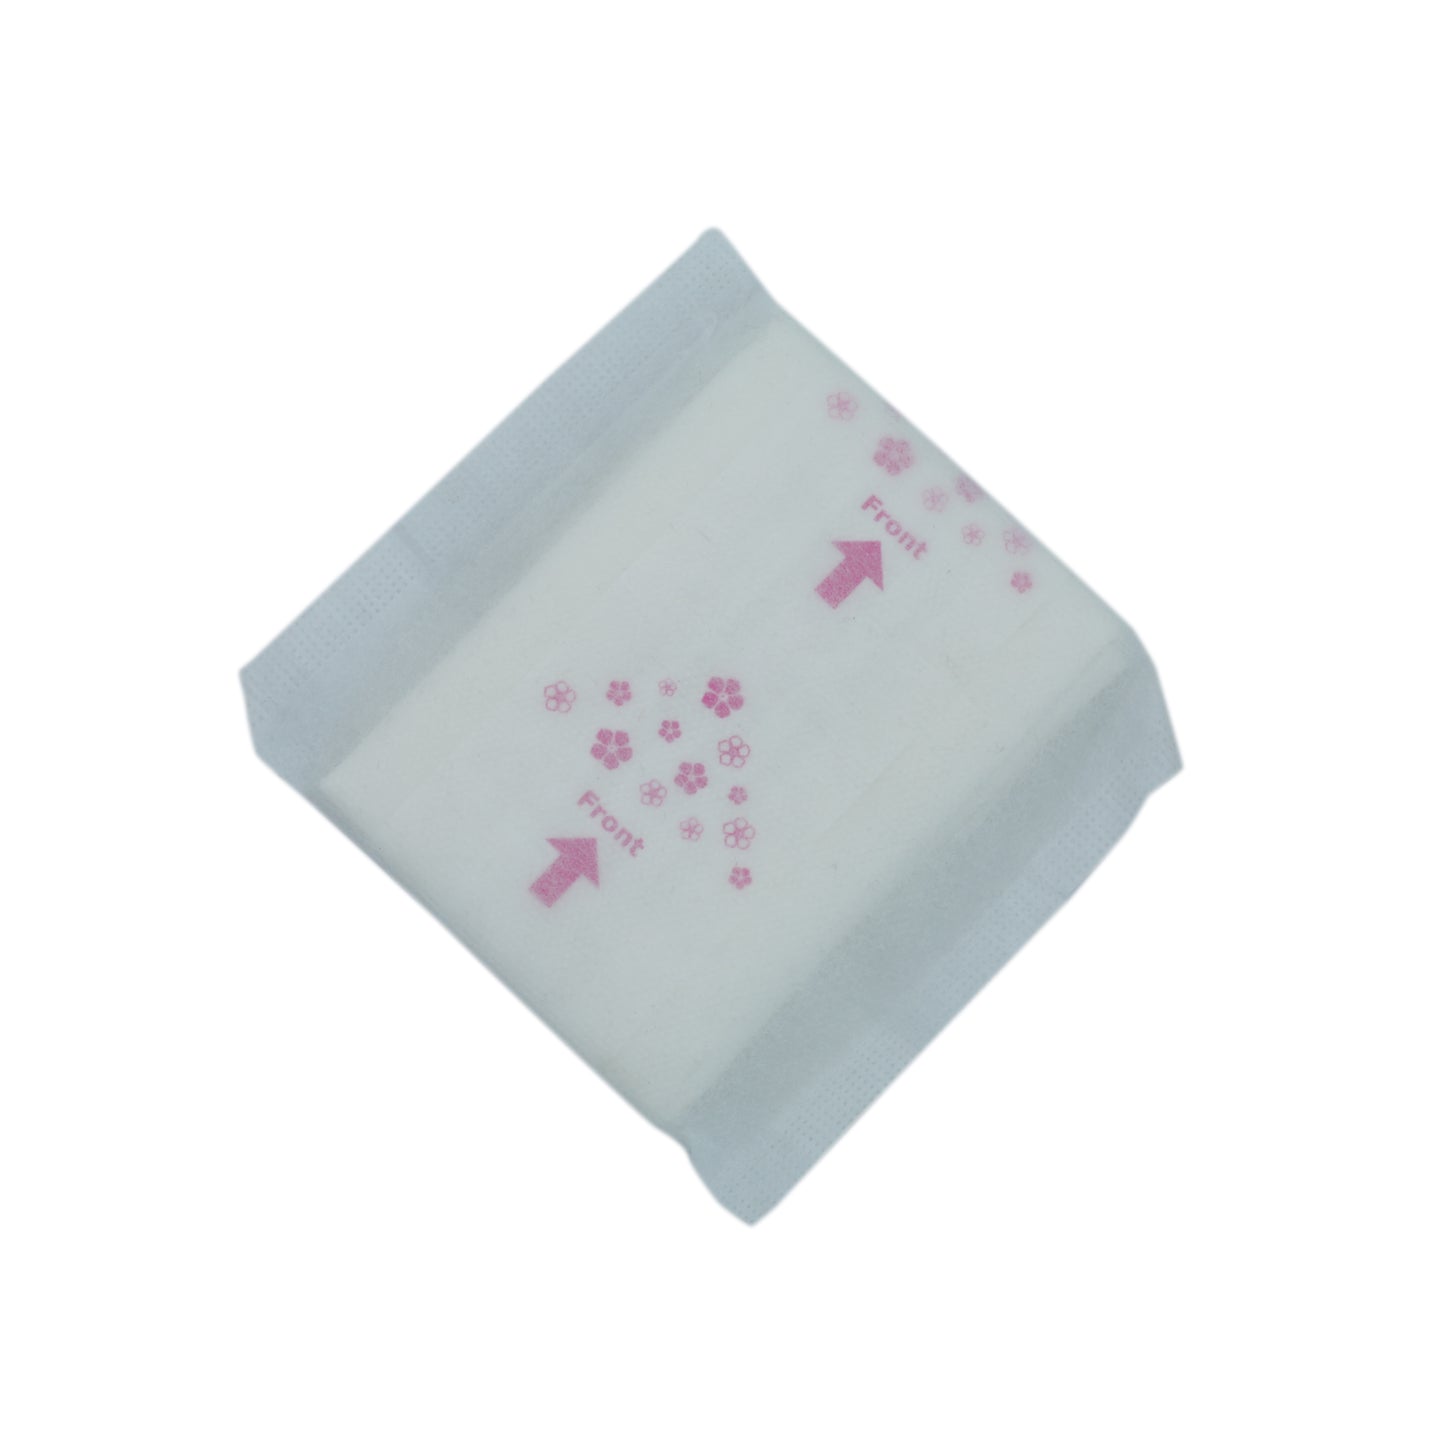 Bio-degradable Sanitary Napkin pack of 5+1